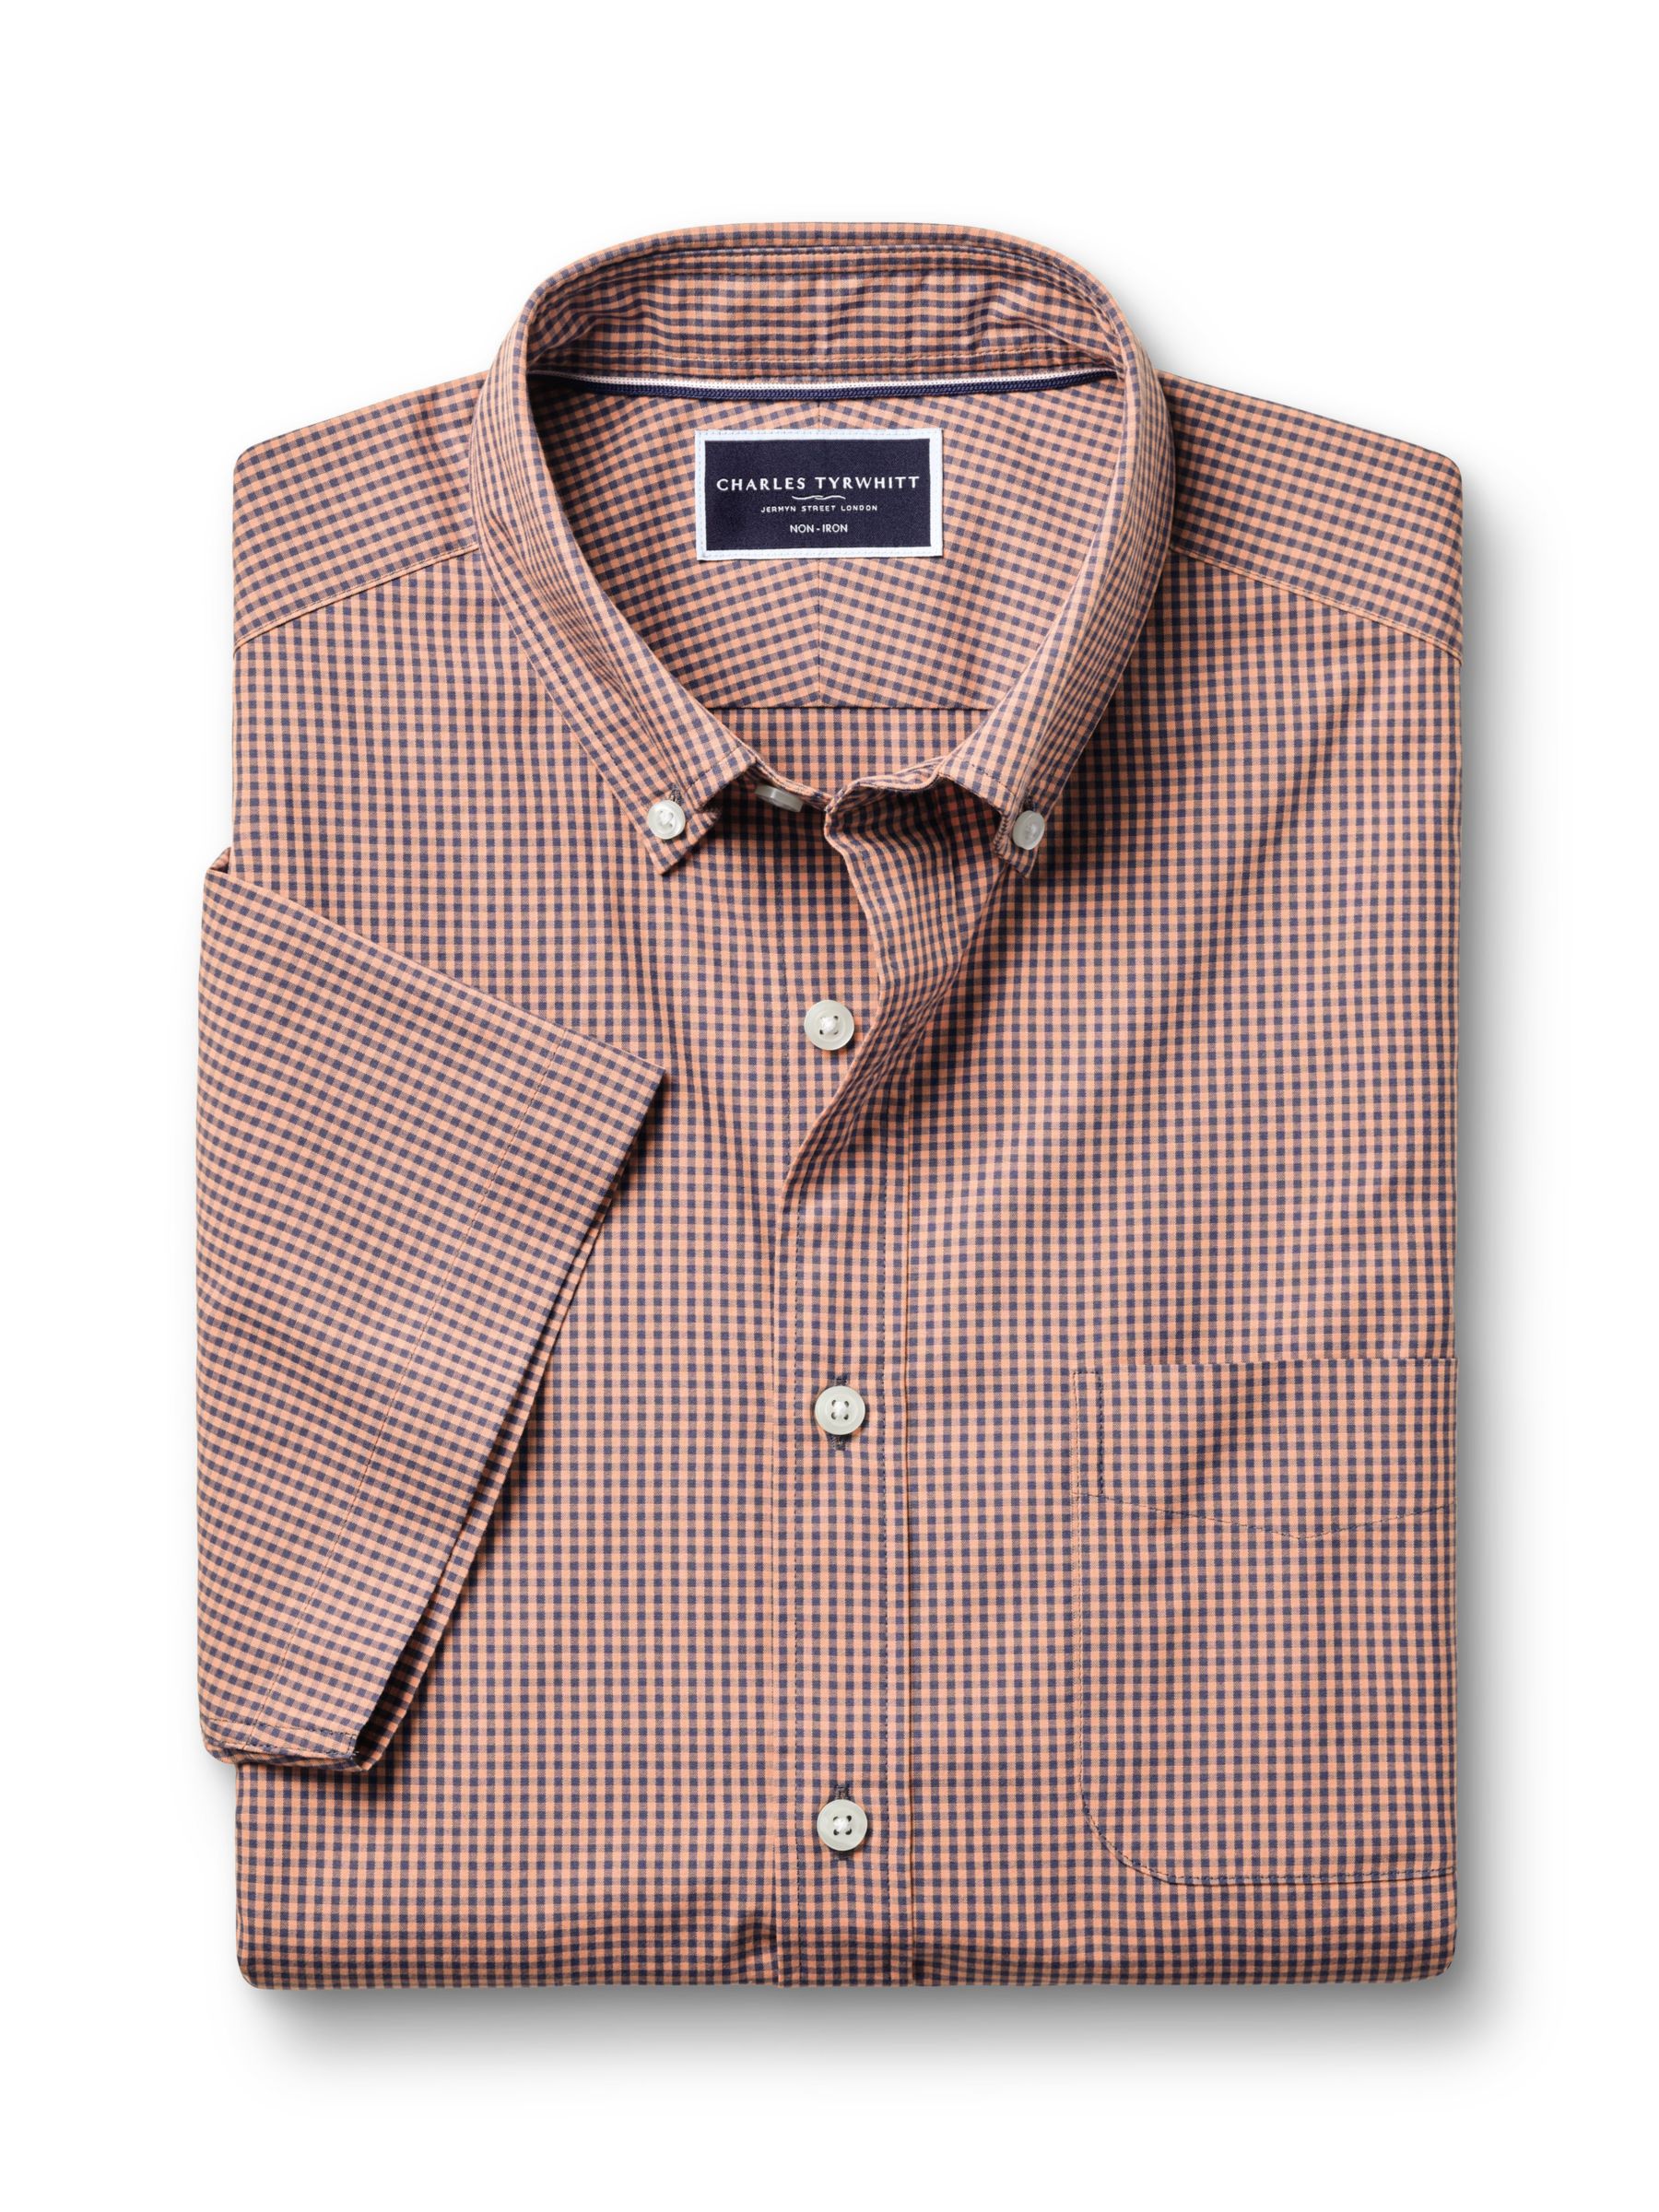 Charles Tyrwhitt Non-Iron Stretch Slim Fit Short Sleeve Shirt, Light Coral Pink, S